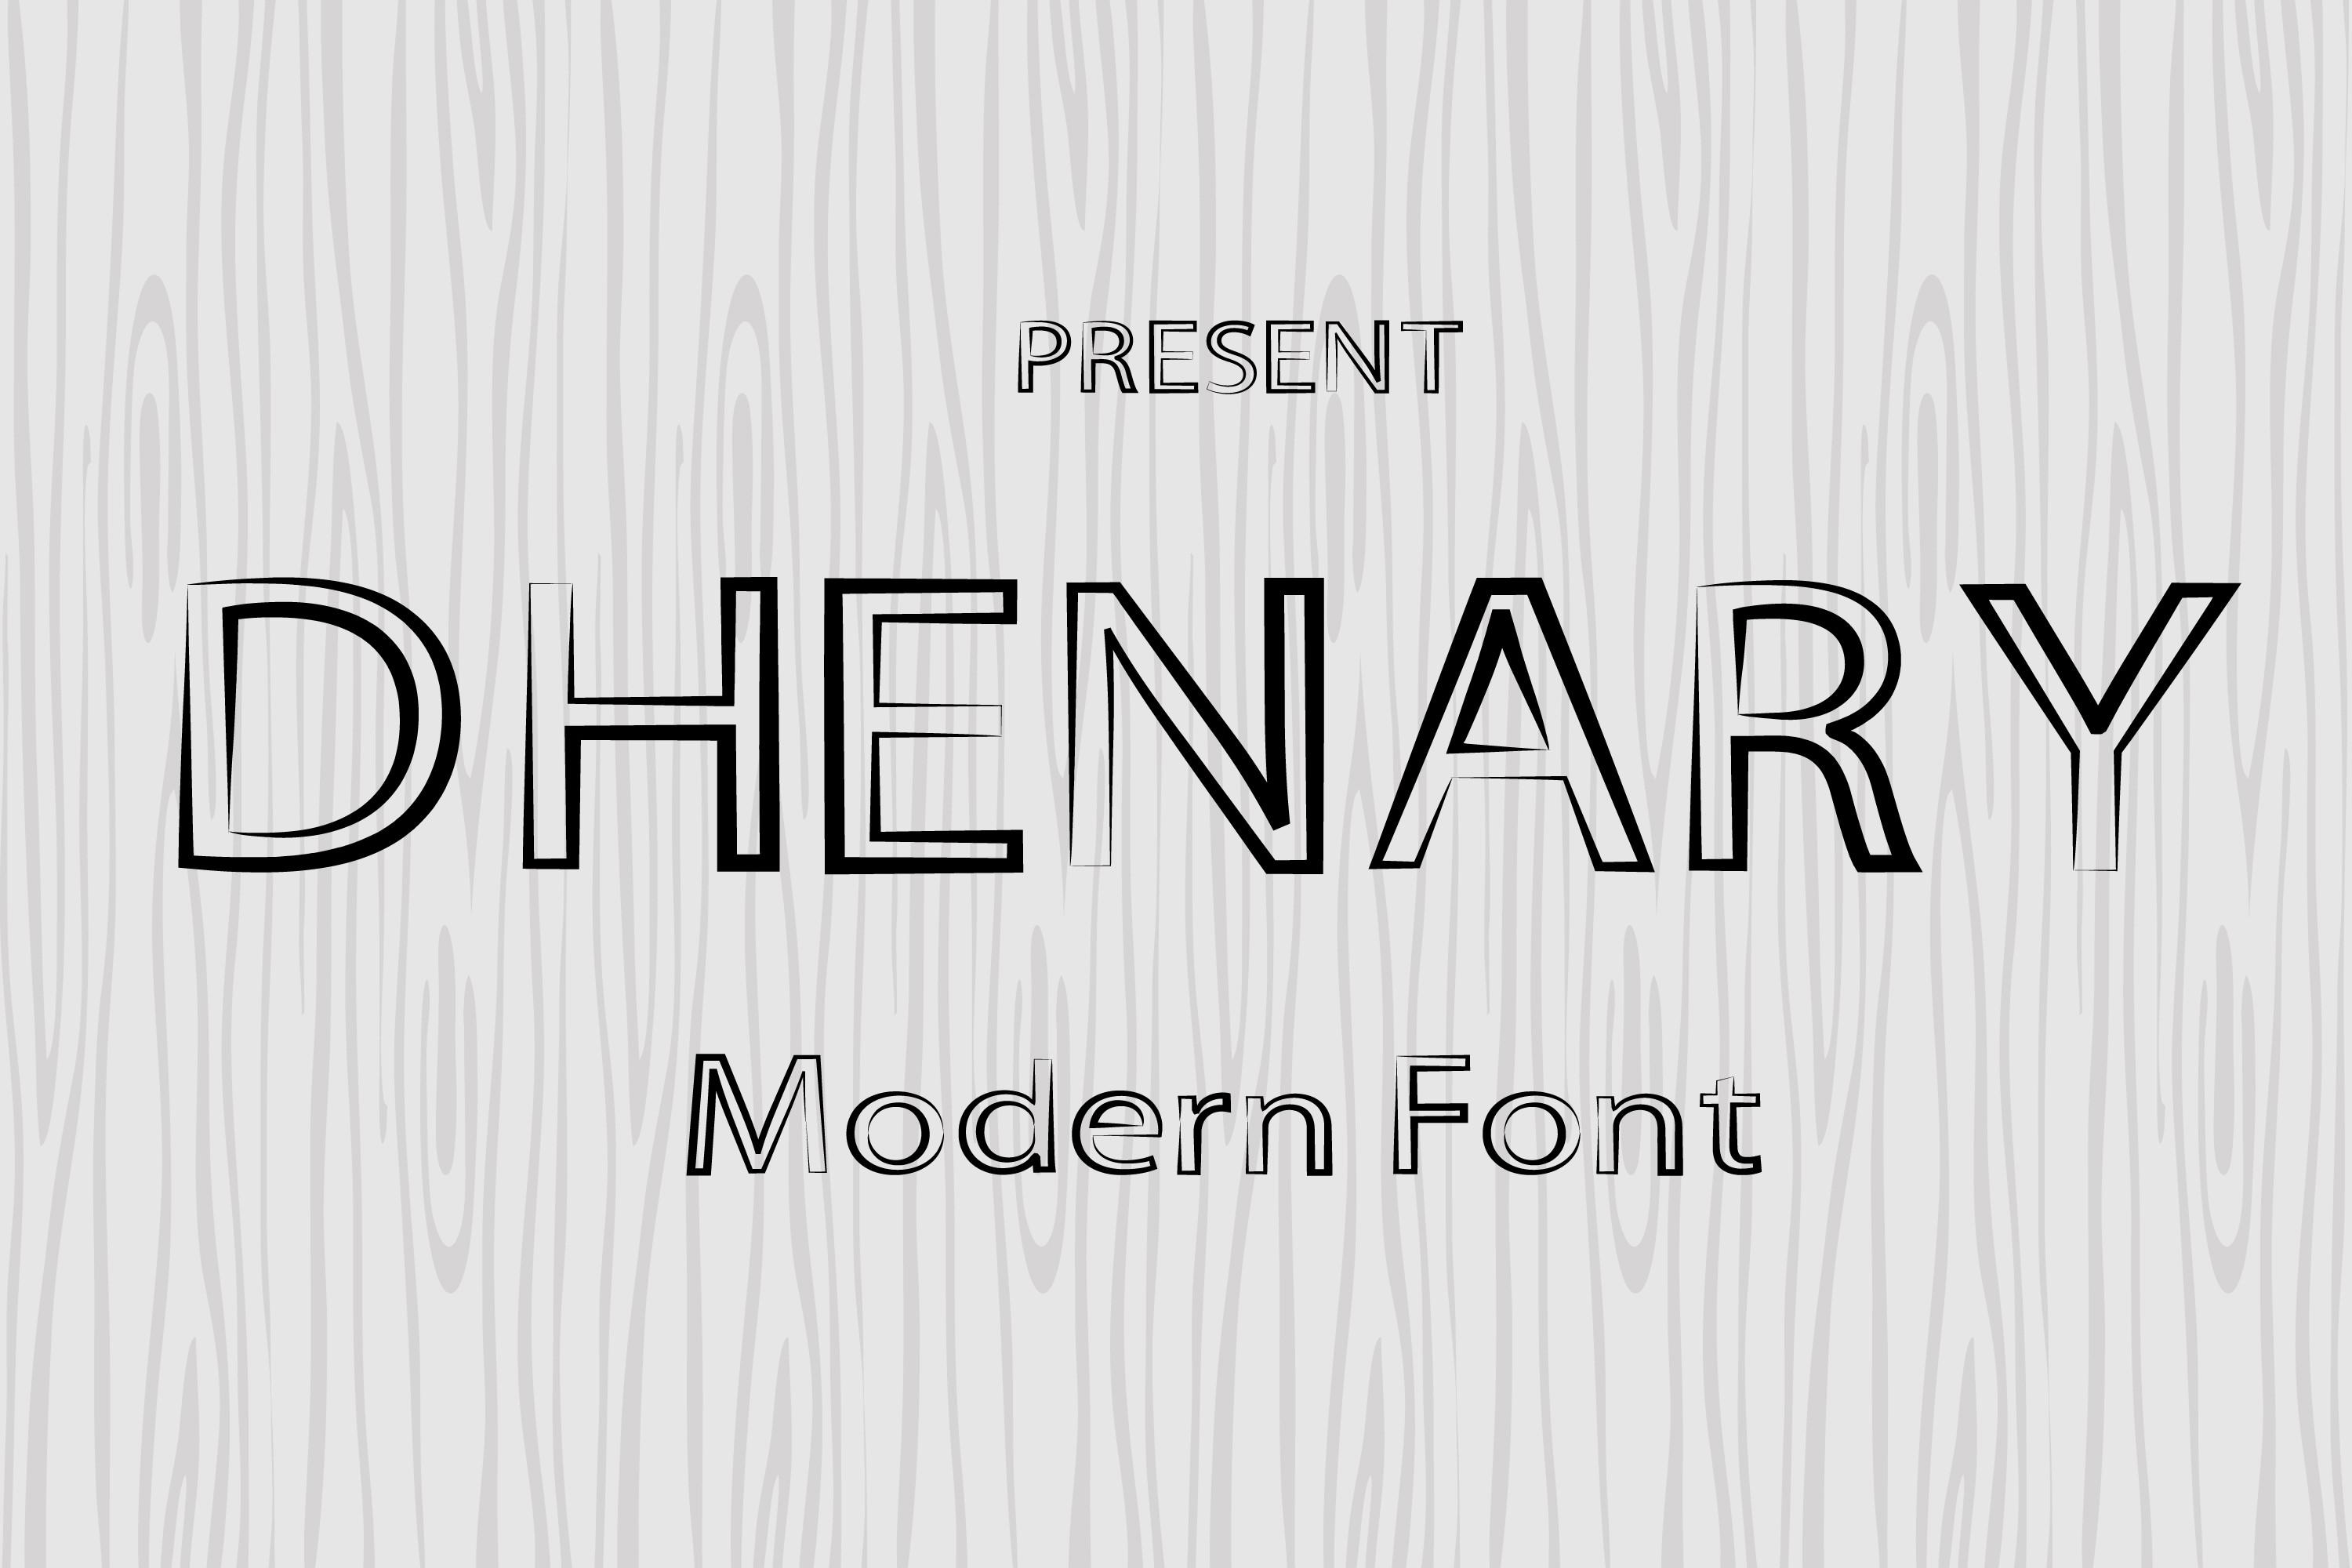 Dhenary Font